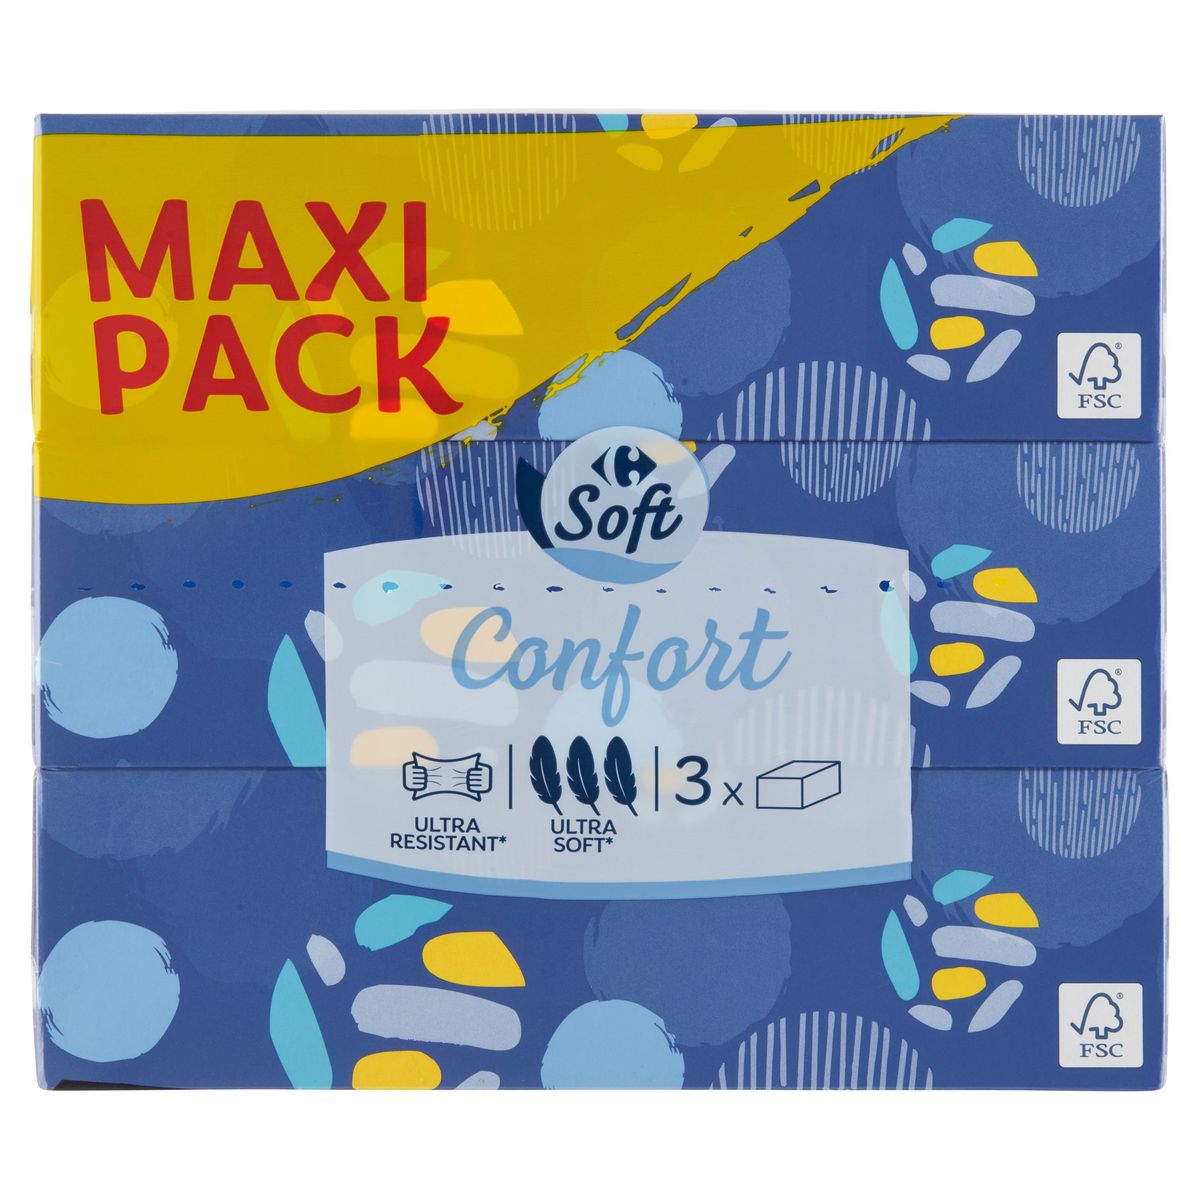 Carrefour Soft Confort 3 Lagen Maxi Pack 3 x 110 Stuks